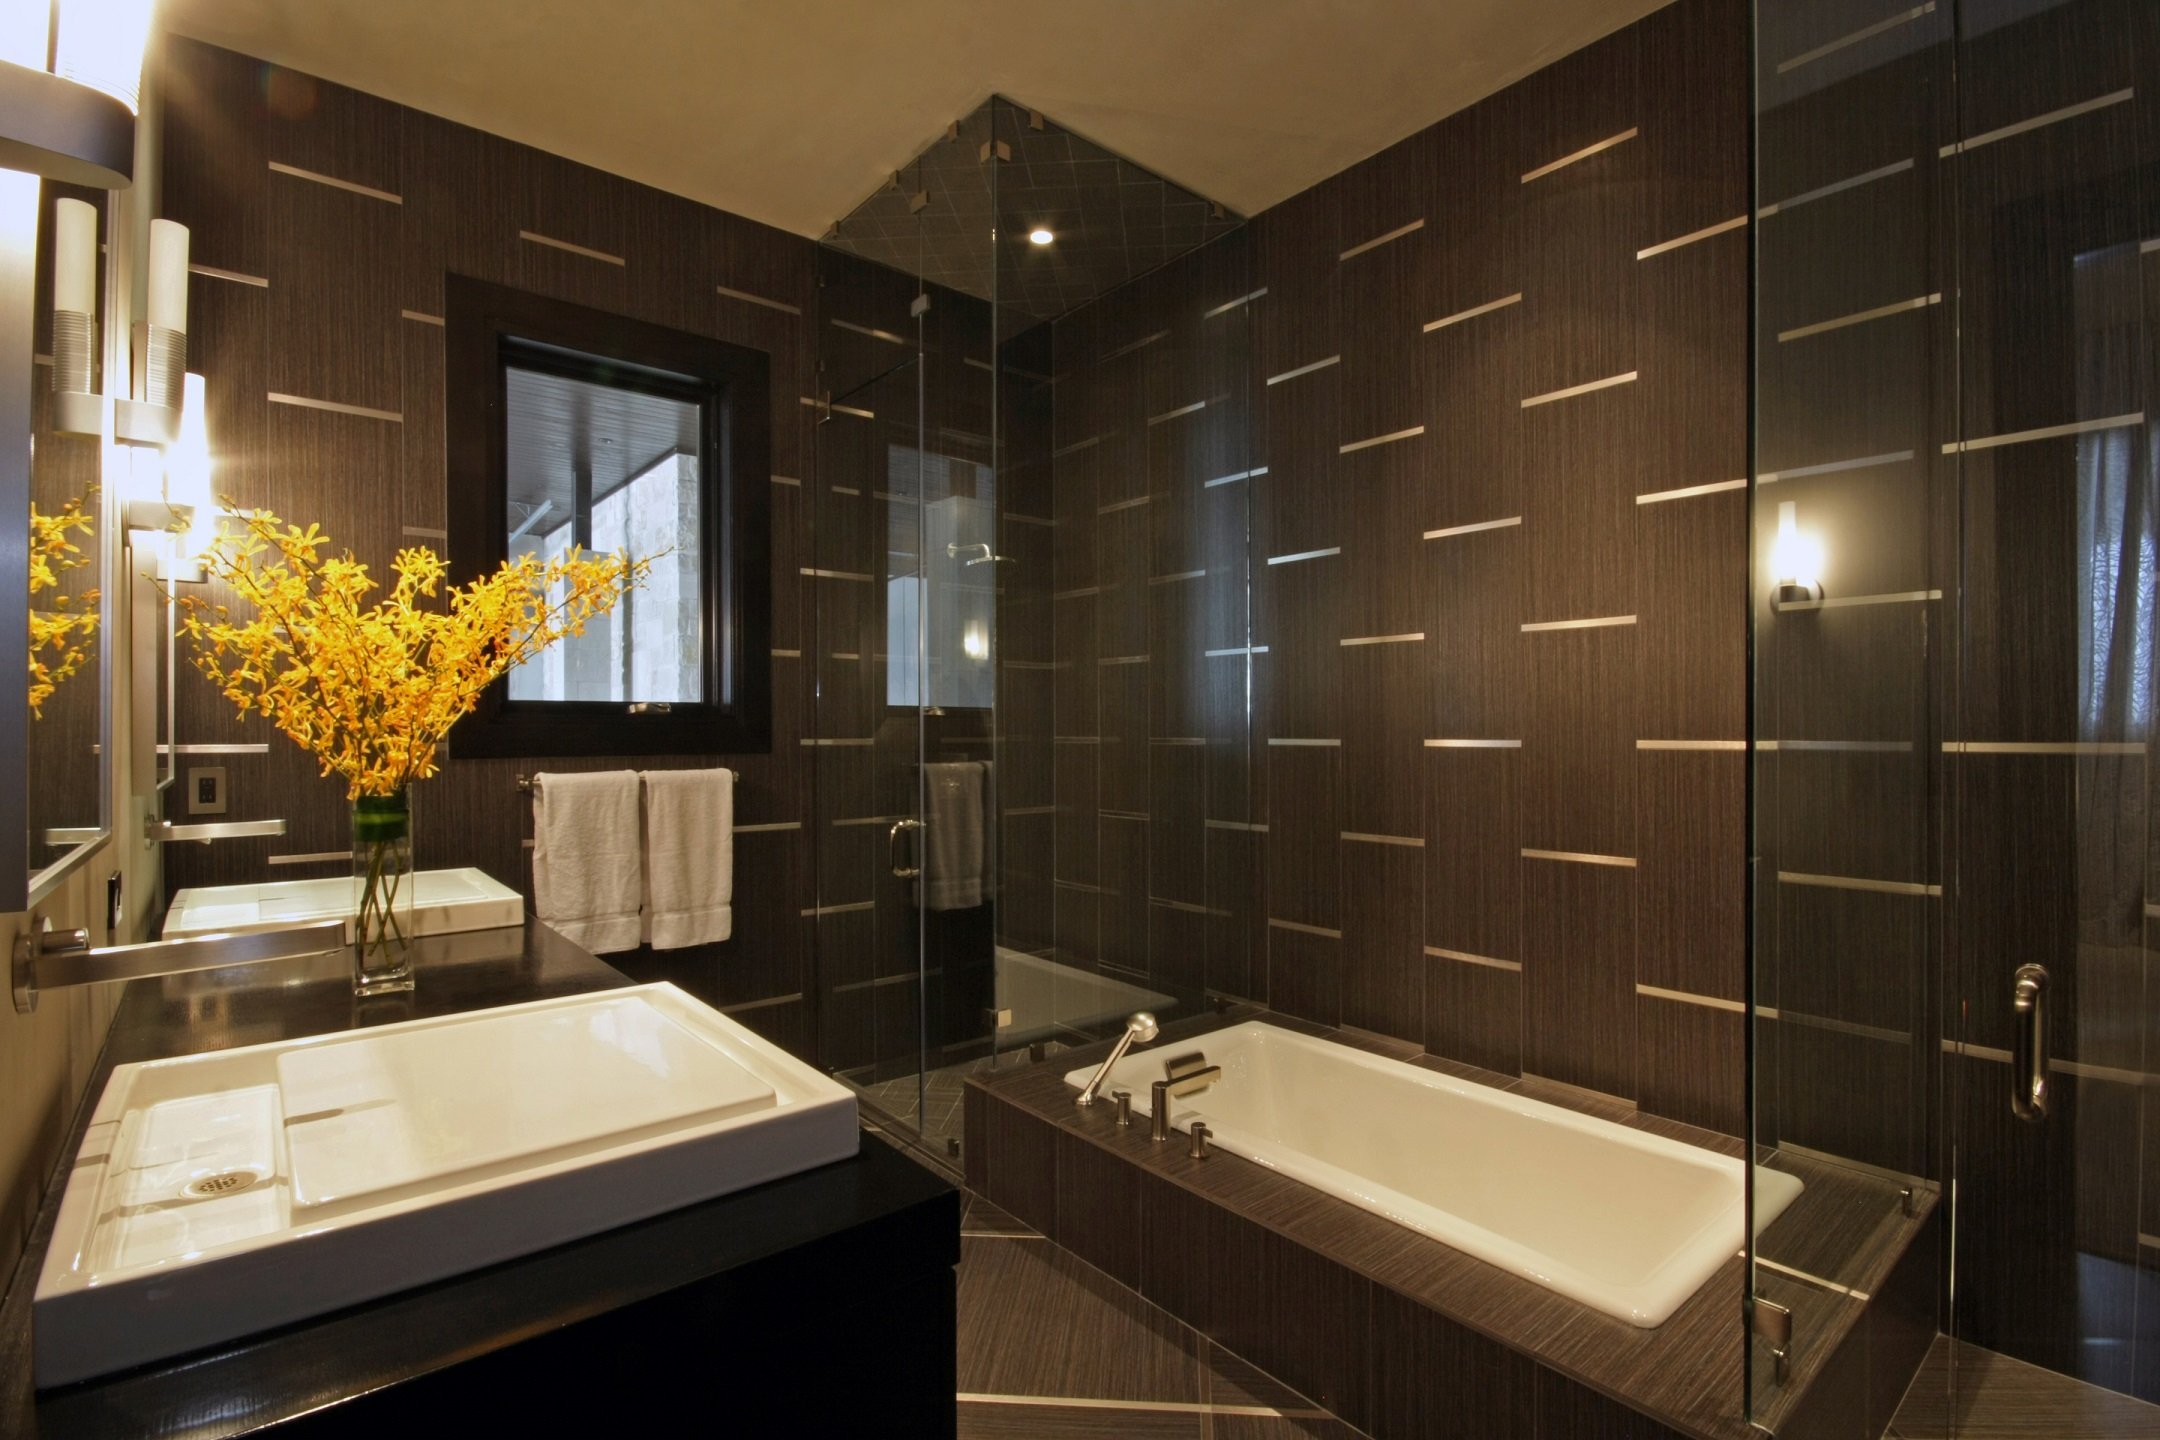 Ванна дизайн коричневая. Стильная ванная комната. Современная ванная комната. Ванная в коричневых тонах. Ванная в коричневом цвете.